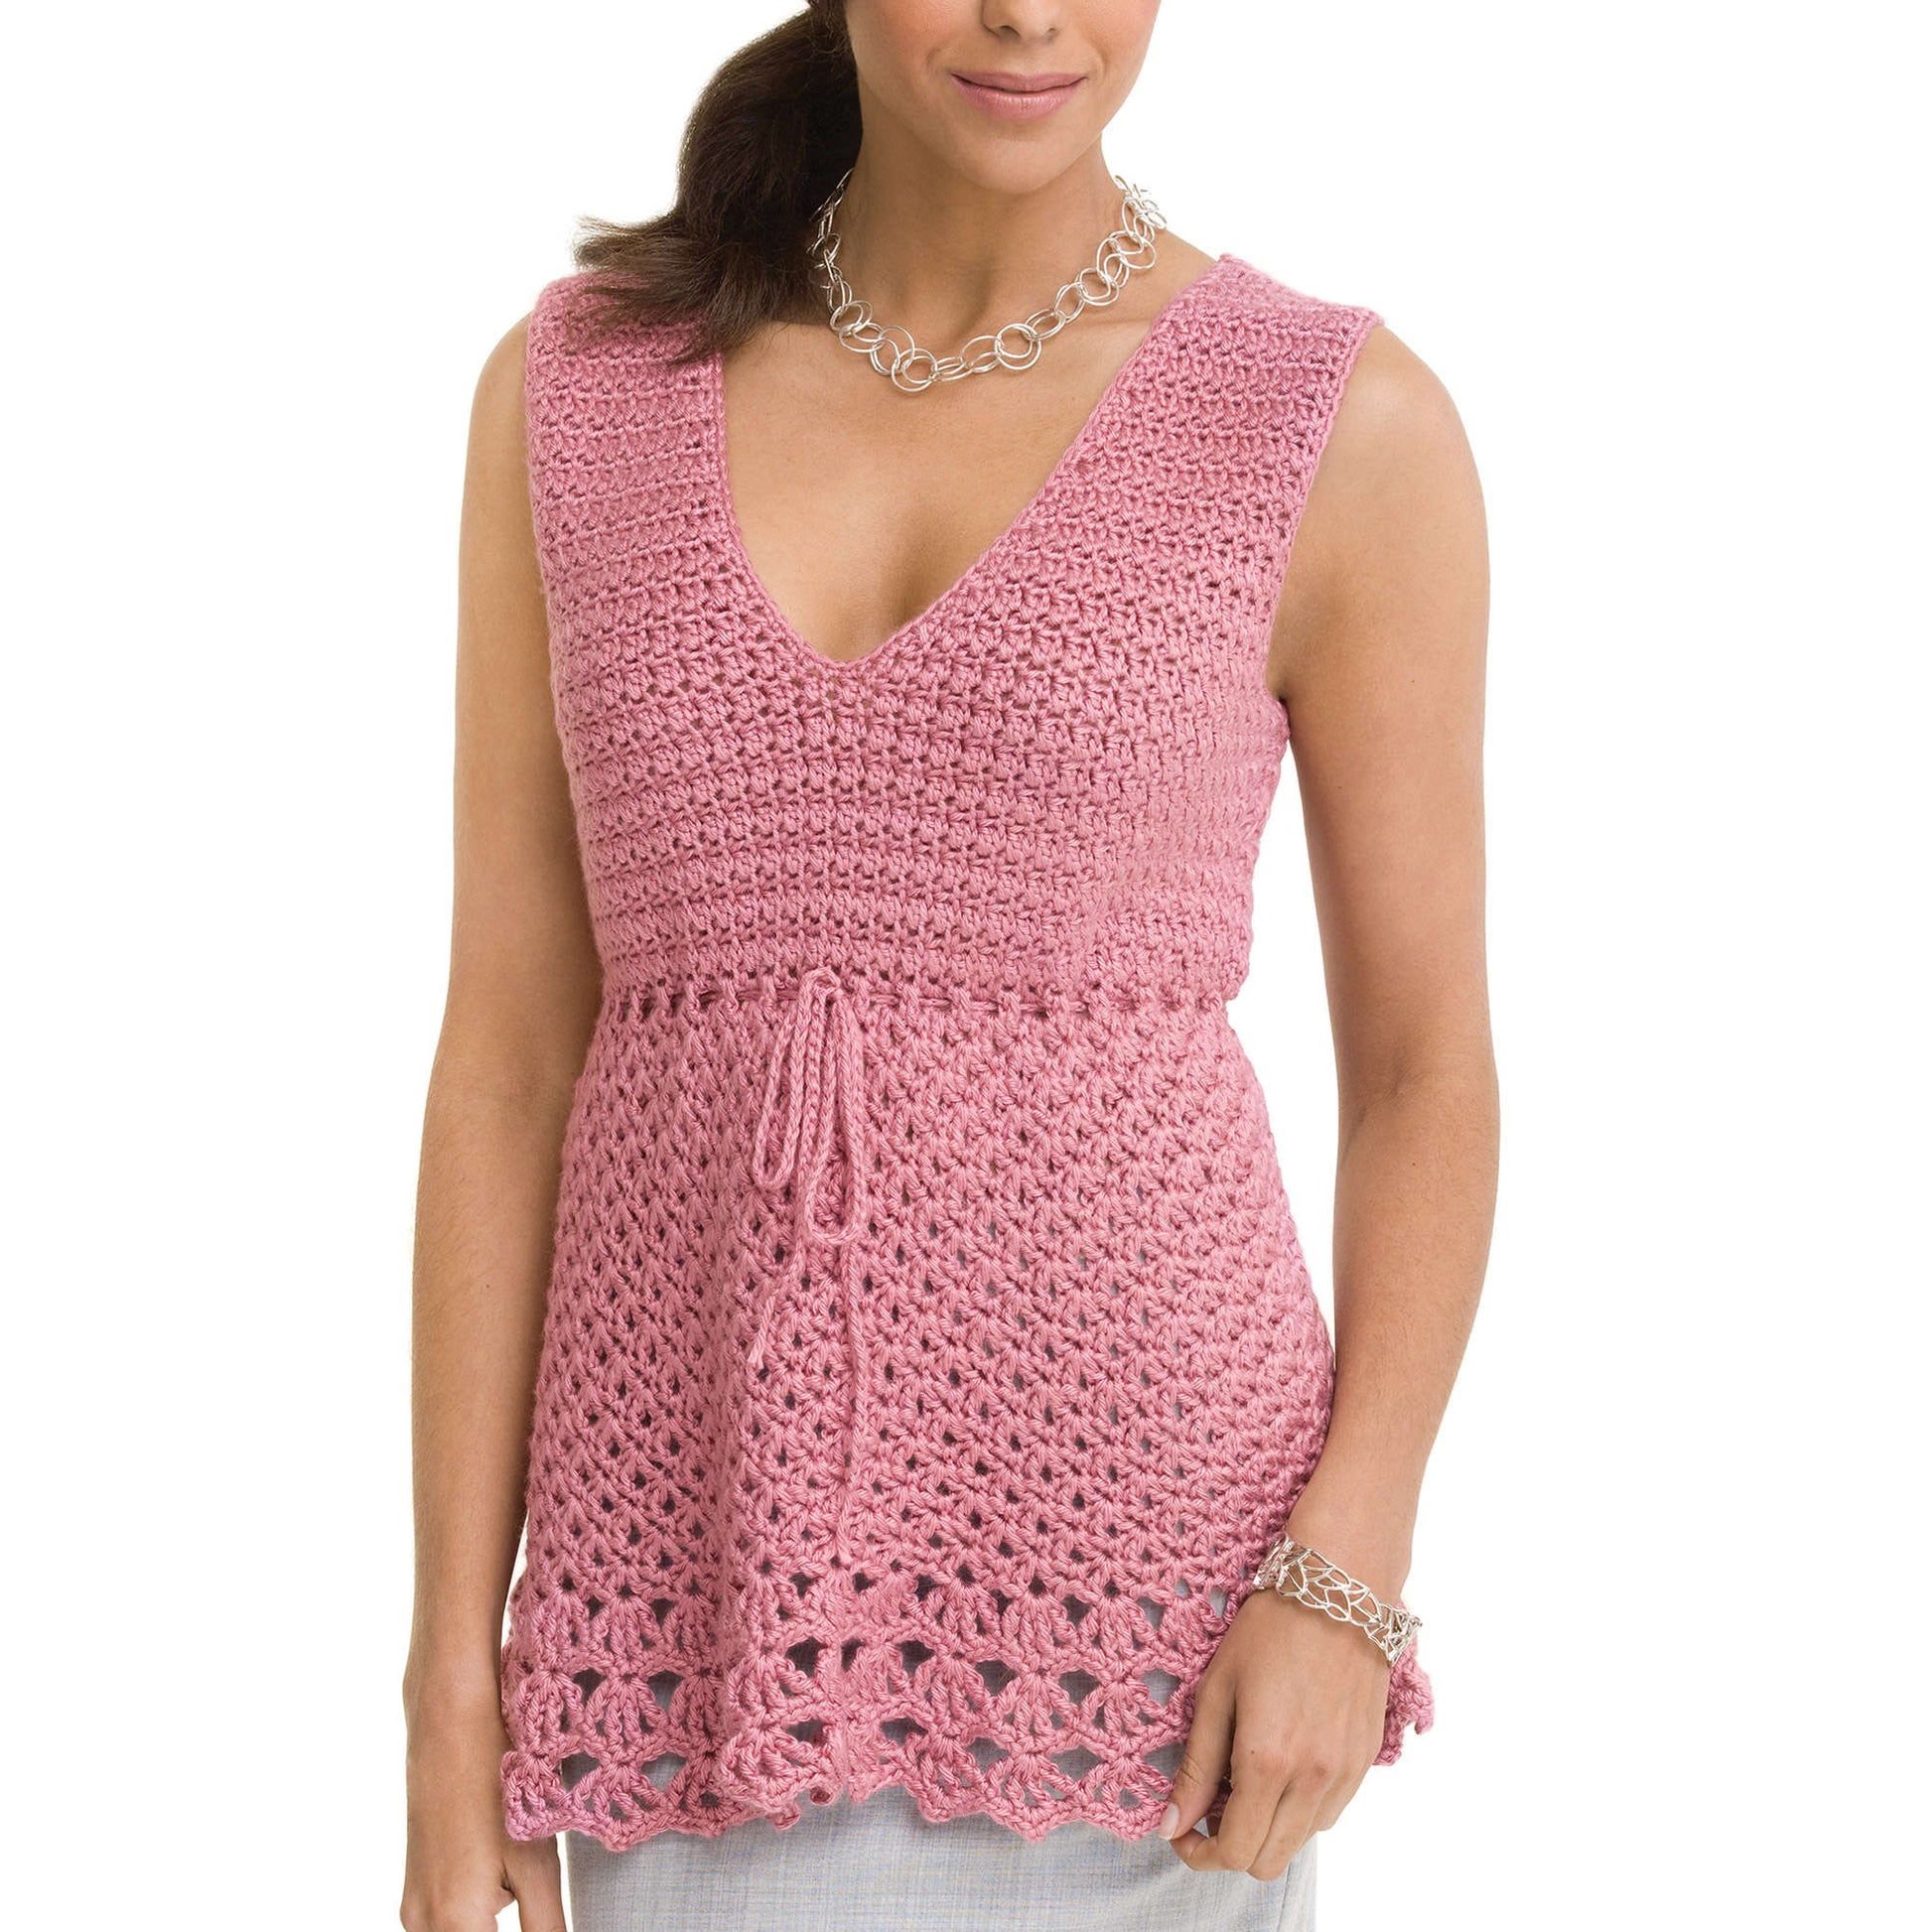 Free Caron Crochet Lacy Cami Pattern